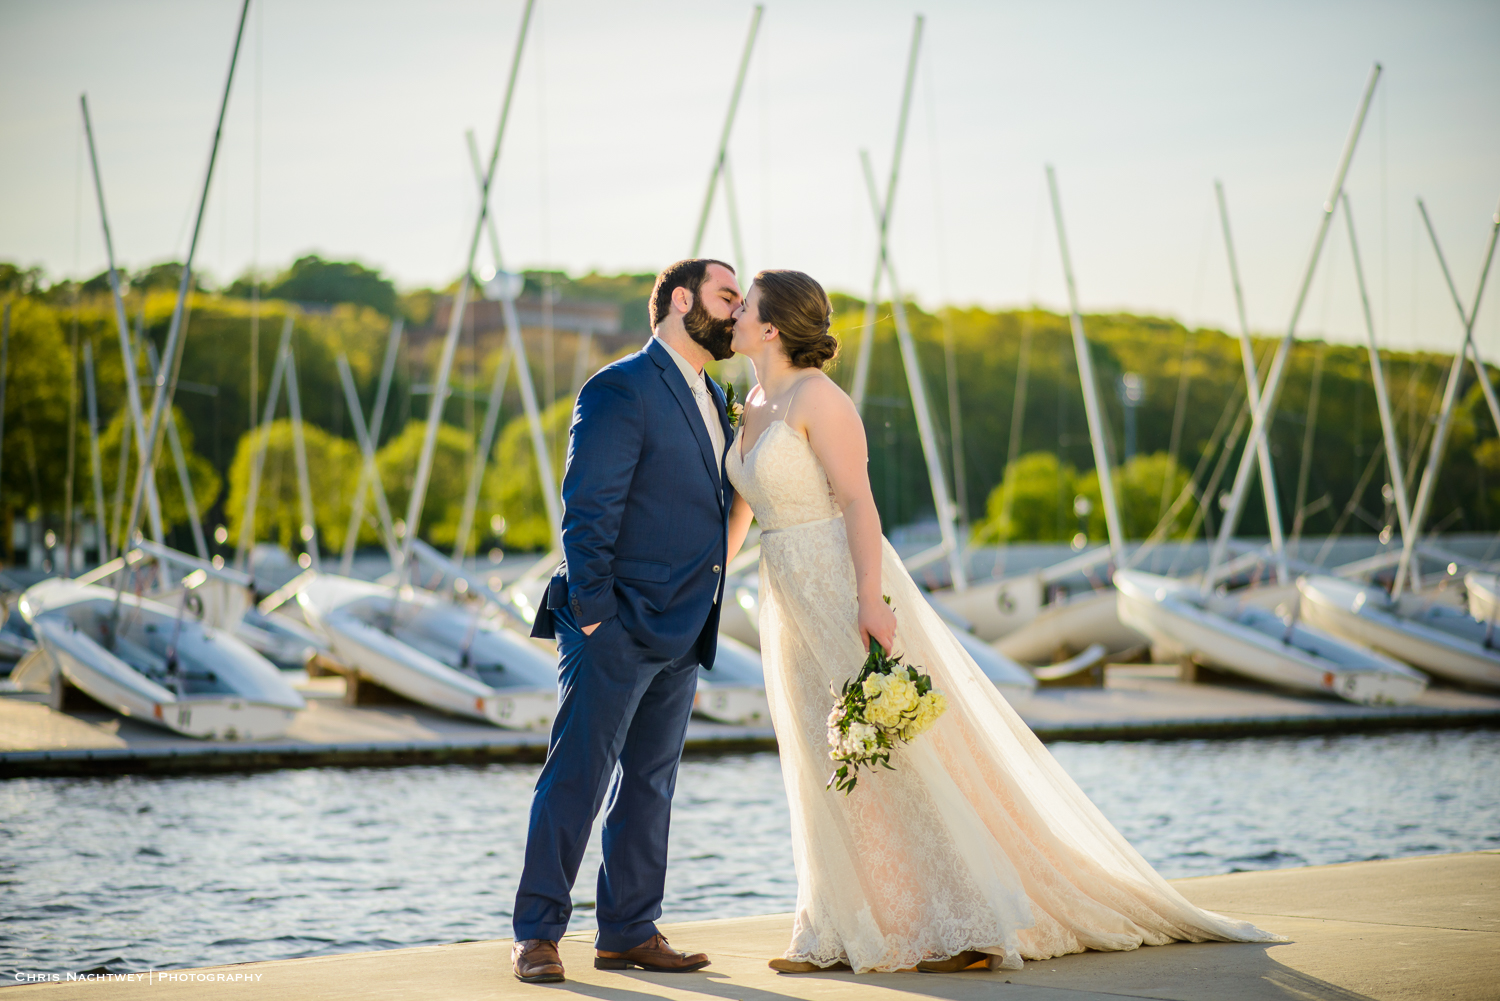 wedding-photos-united-states-coast-guard-academy-chris-nachtwey-photography-2019-23.jpg